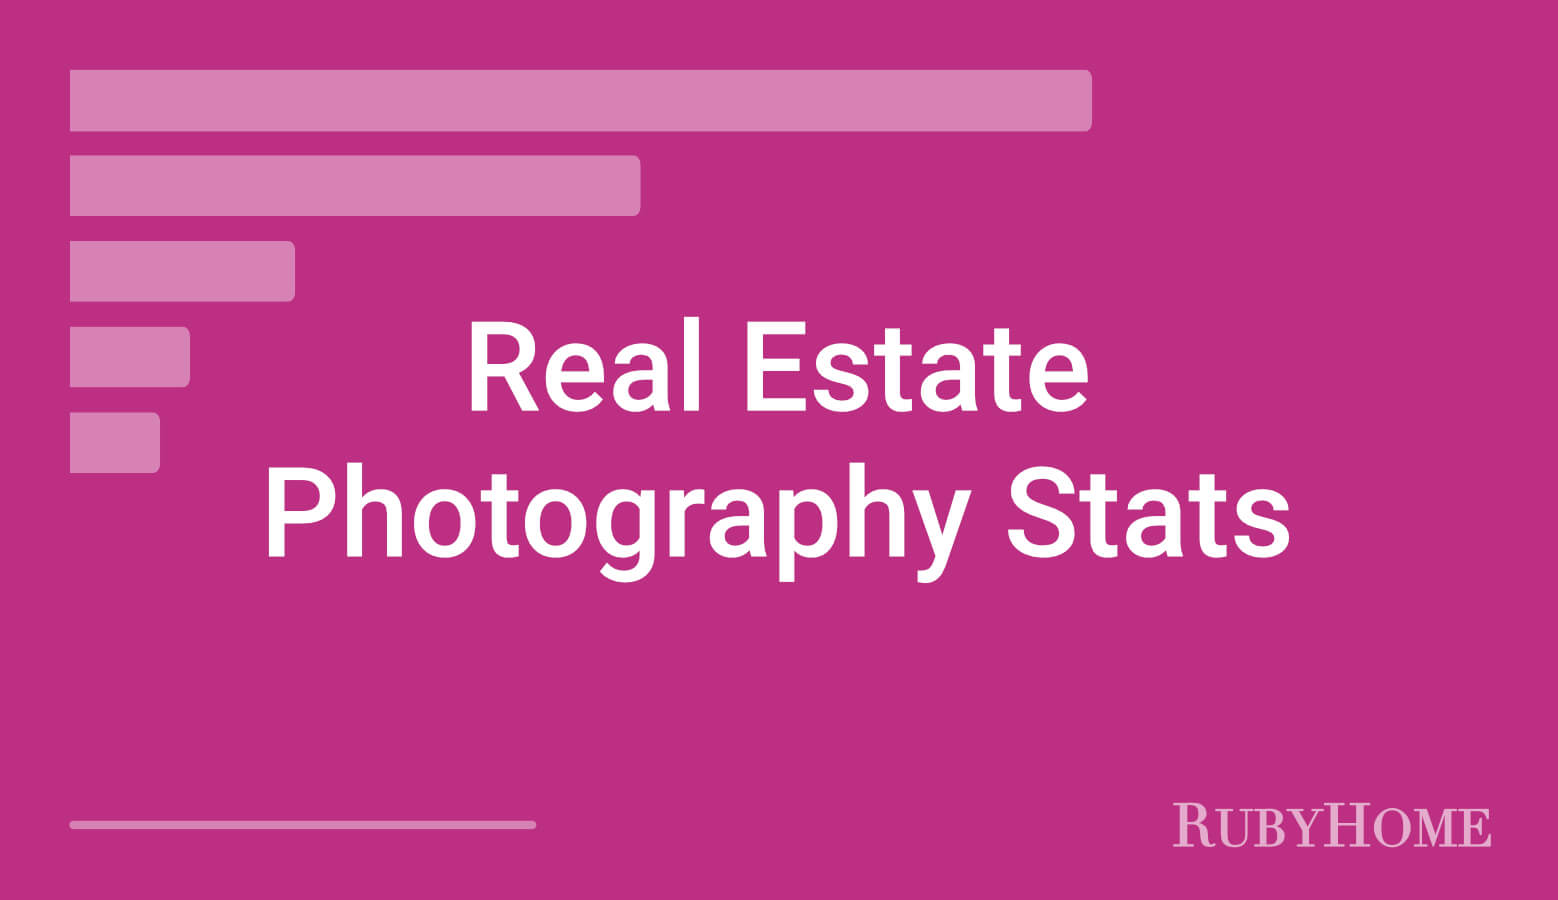 Real Estate Photography Statistics